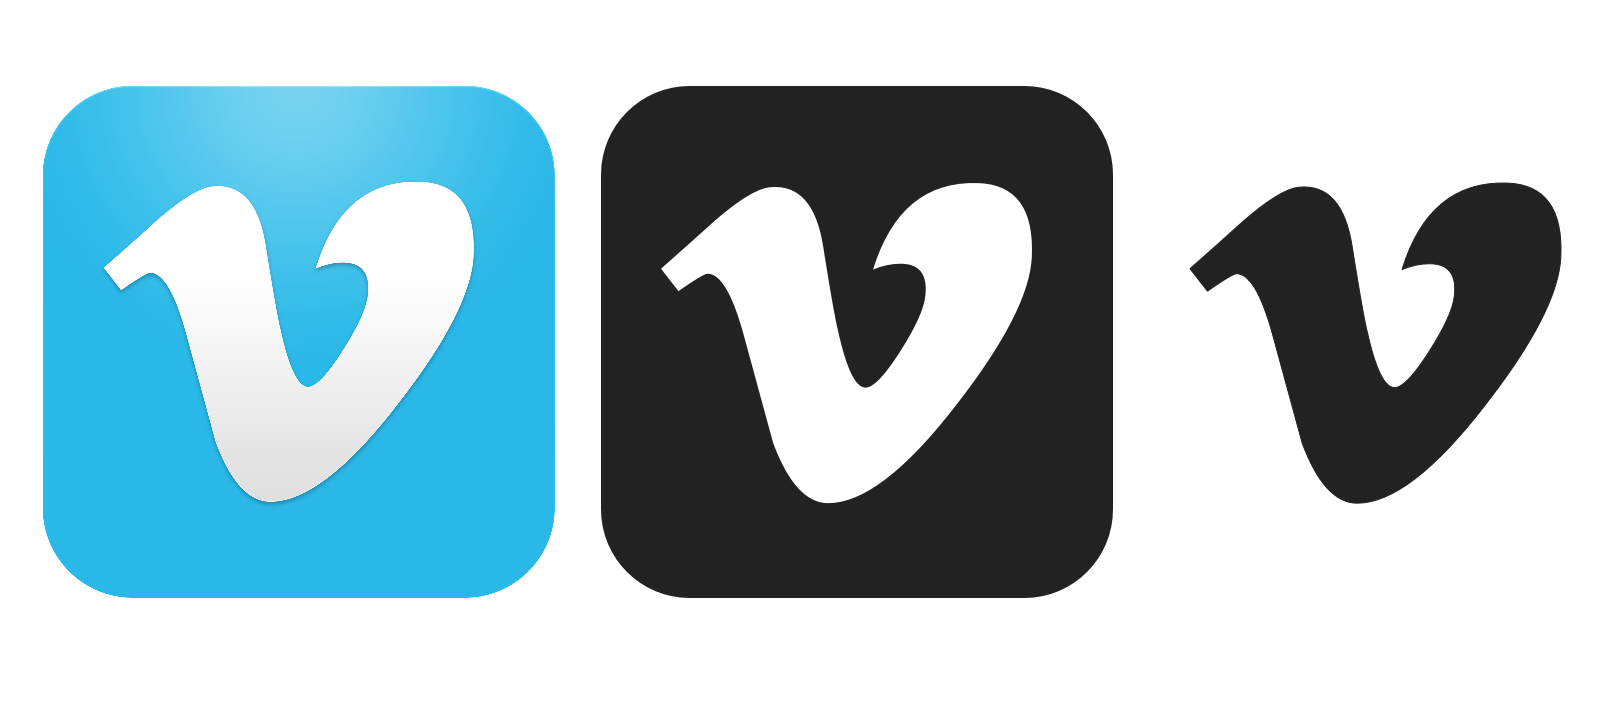 Vimeo icon vector | Download free